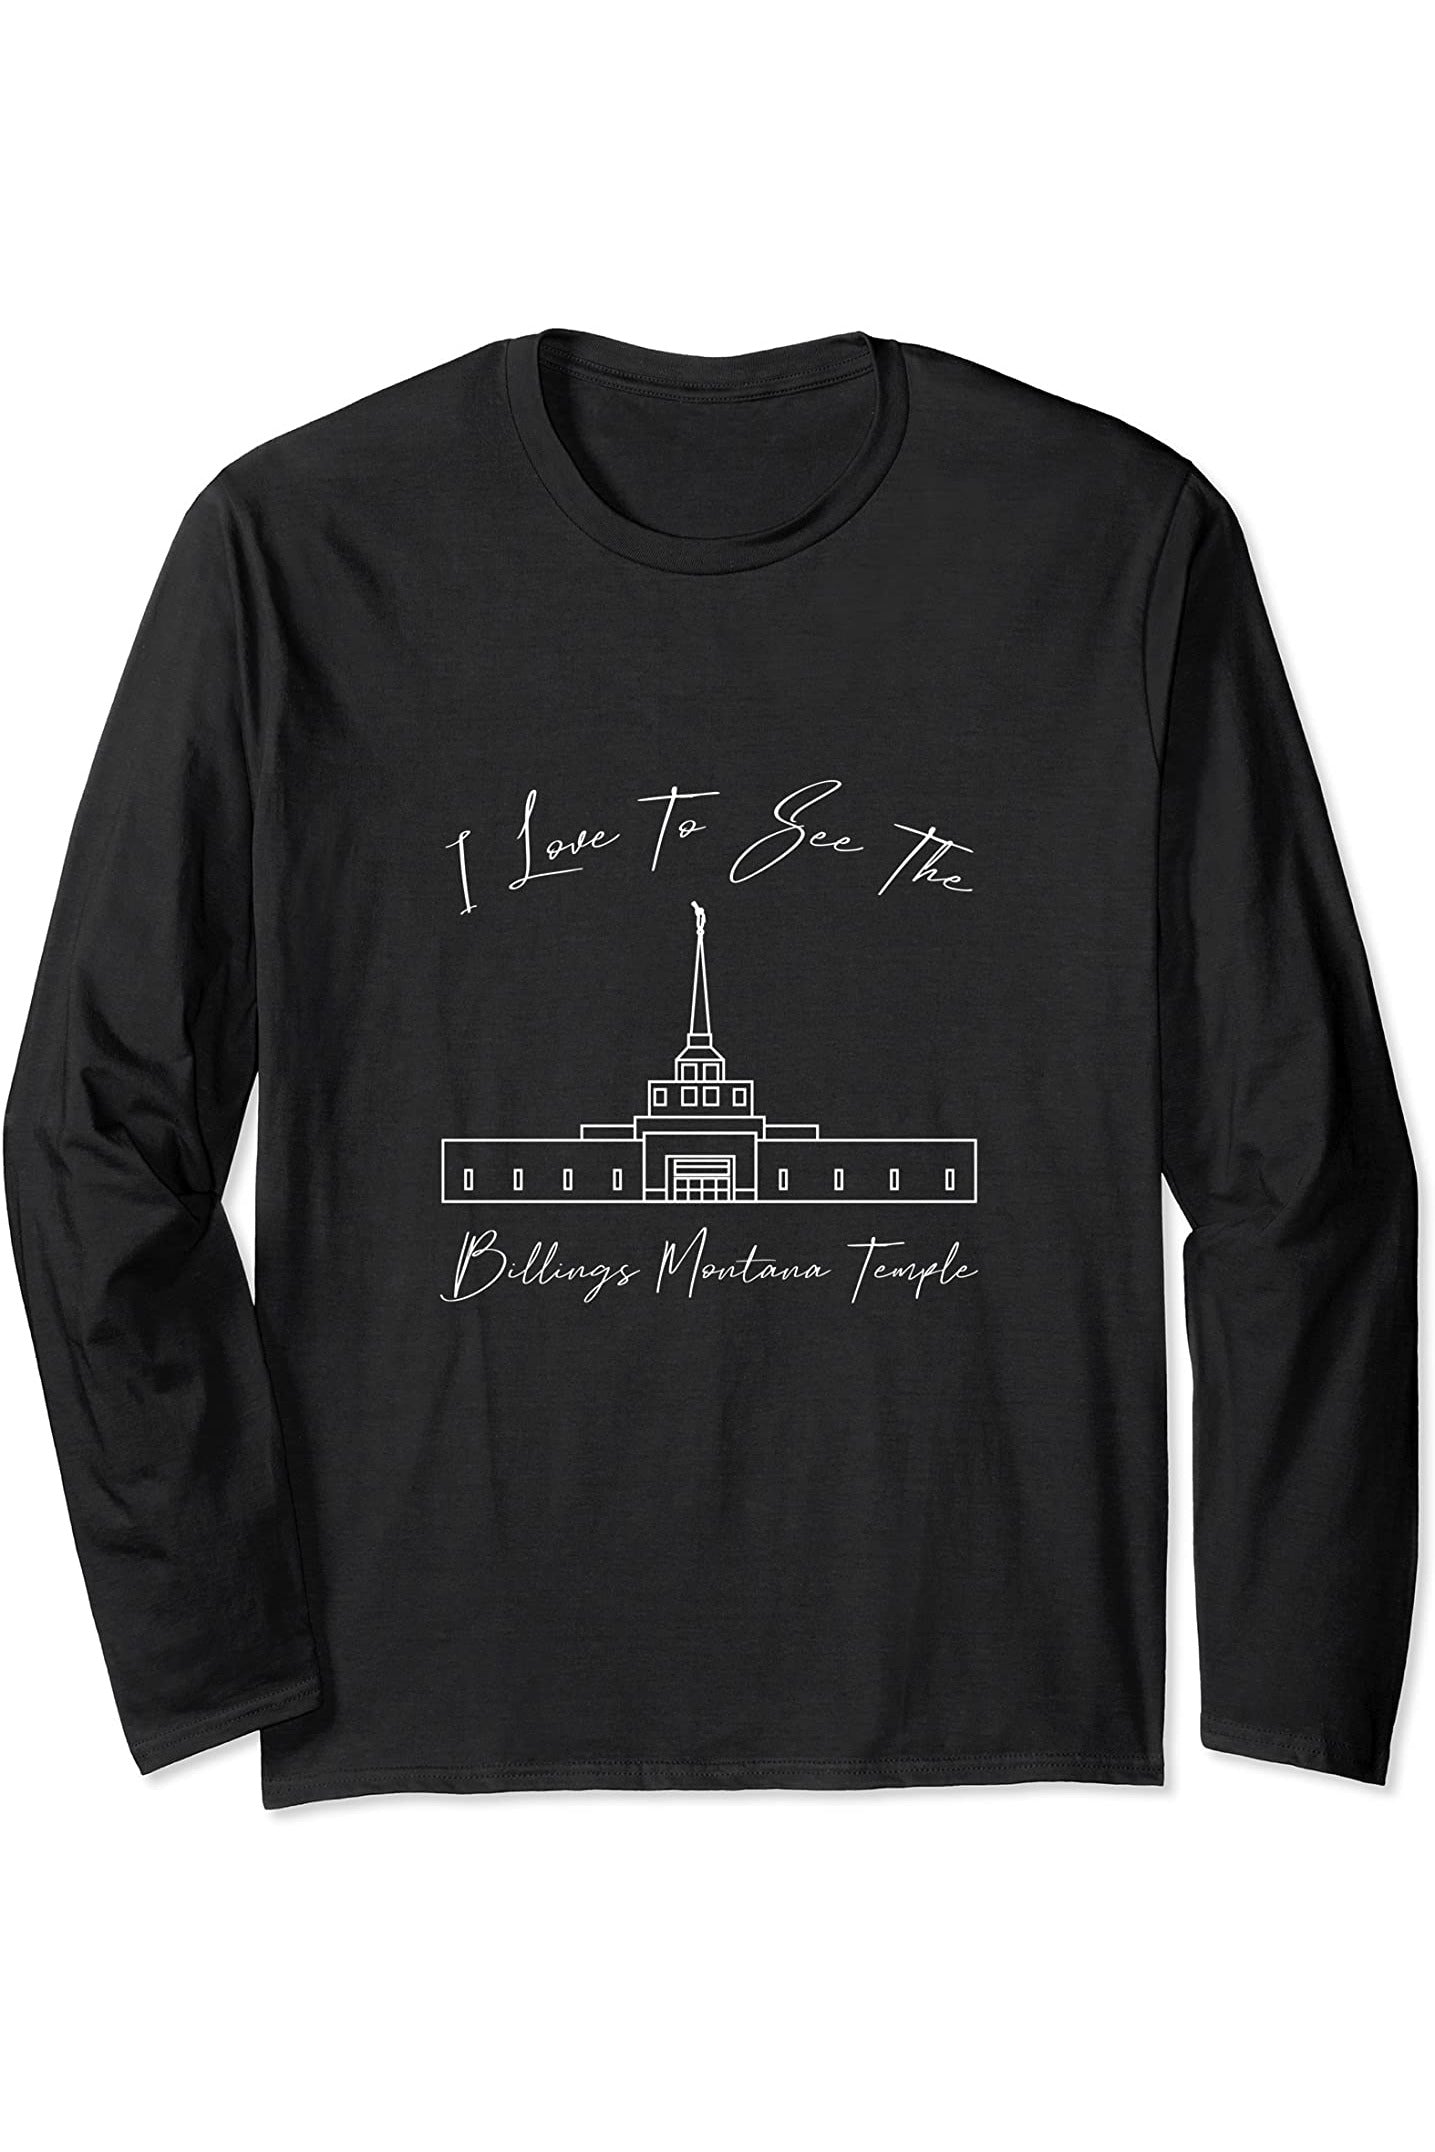 Billings Montana Temple Long Sleeve T-Shirt - Calligraphy Style (English) US